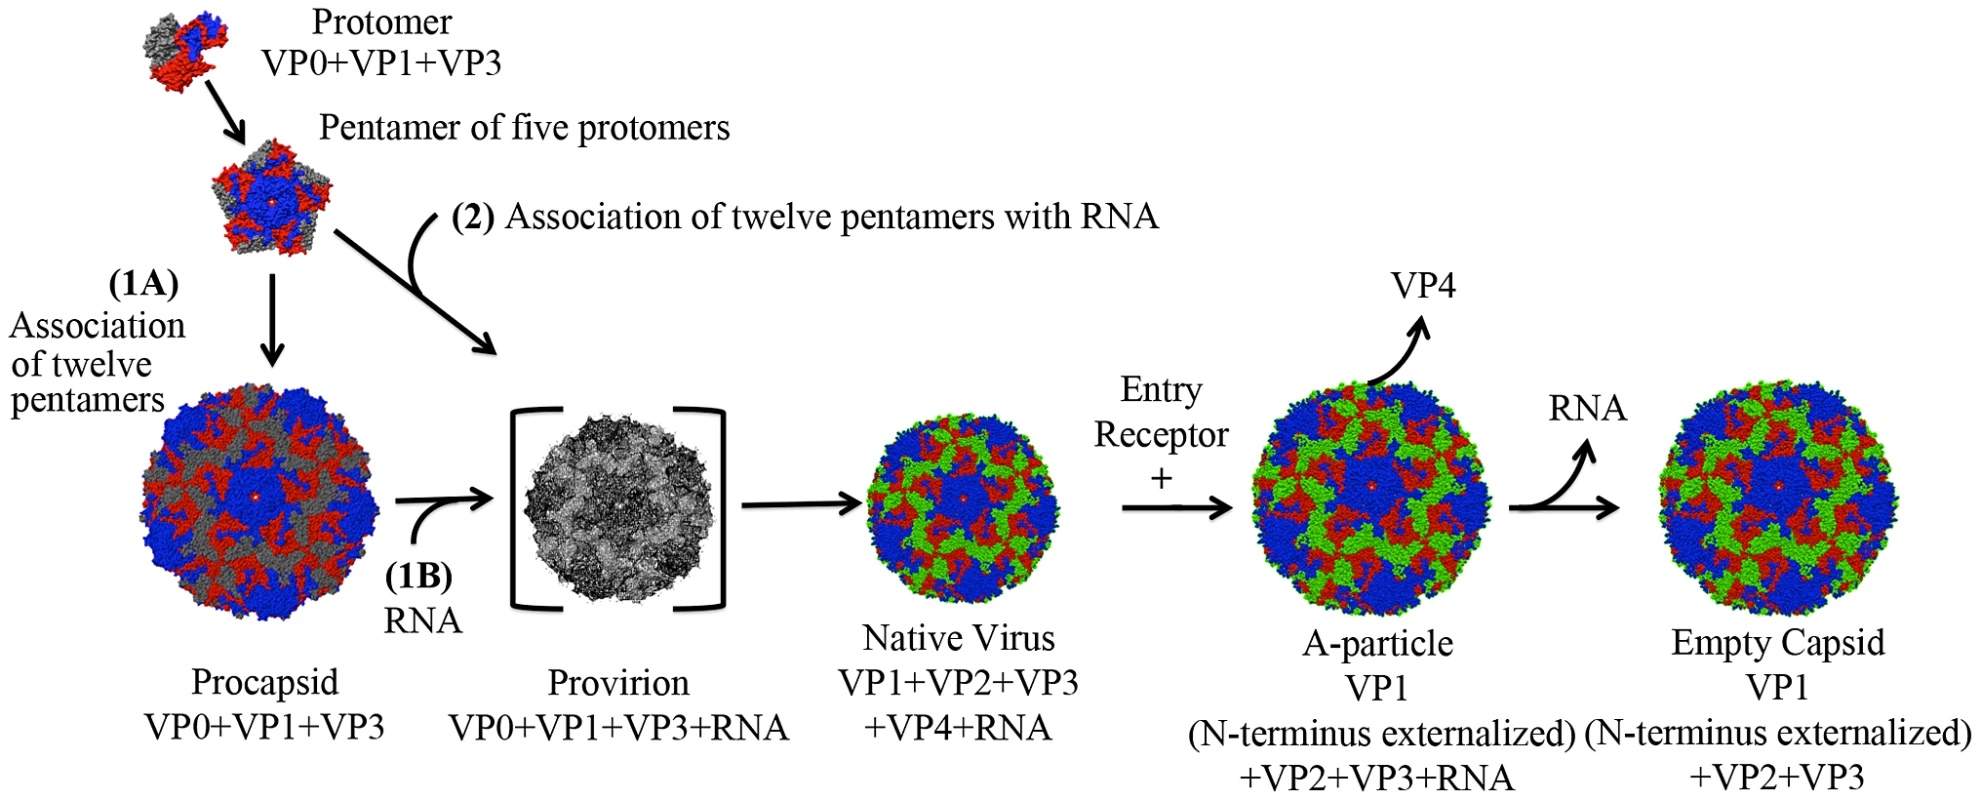 Lifecycle of a human enterovirus.